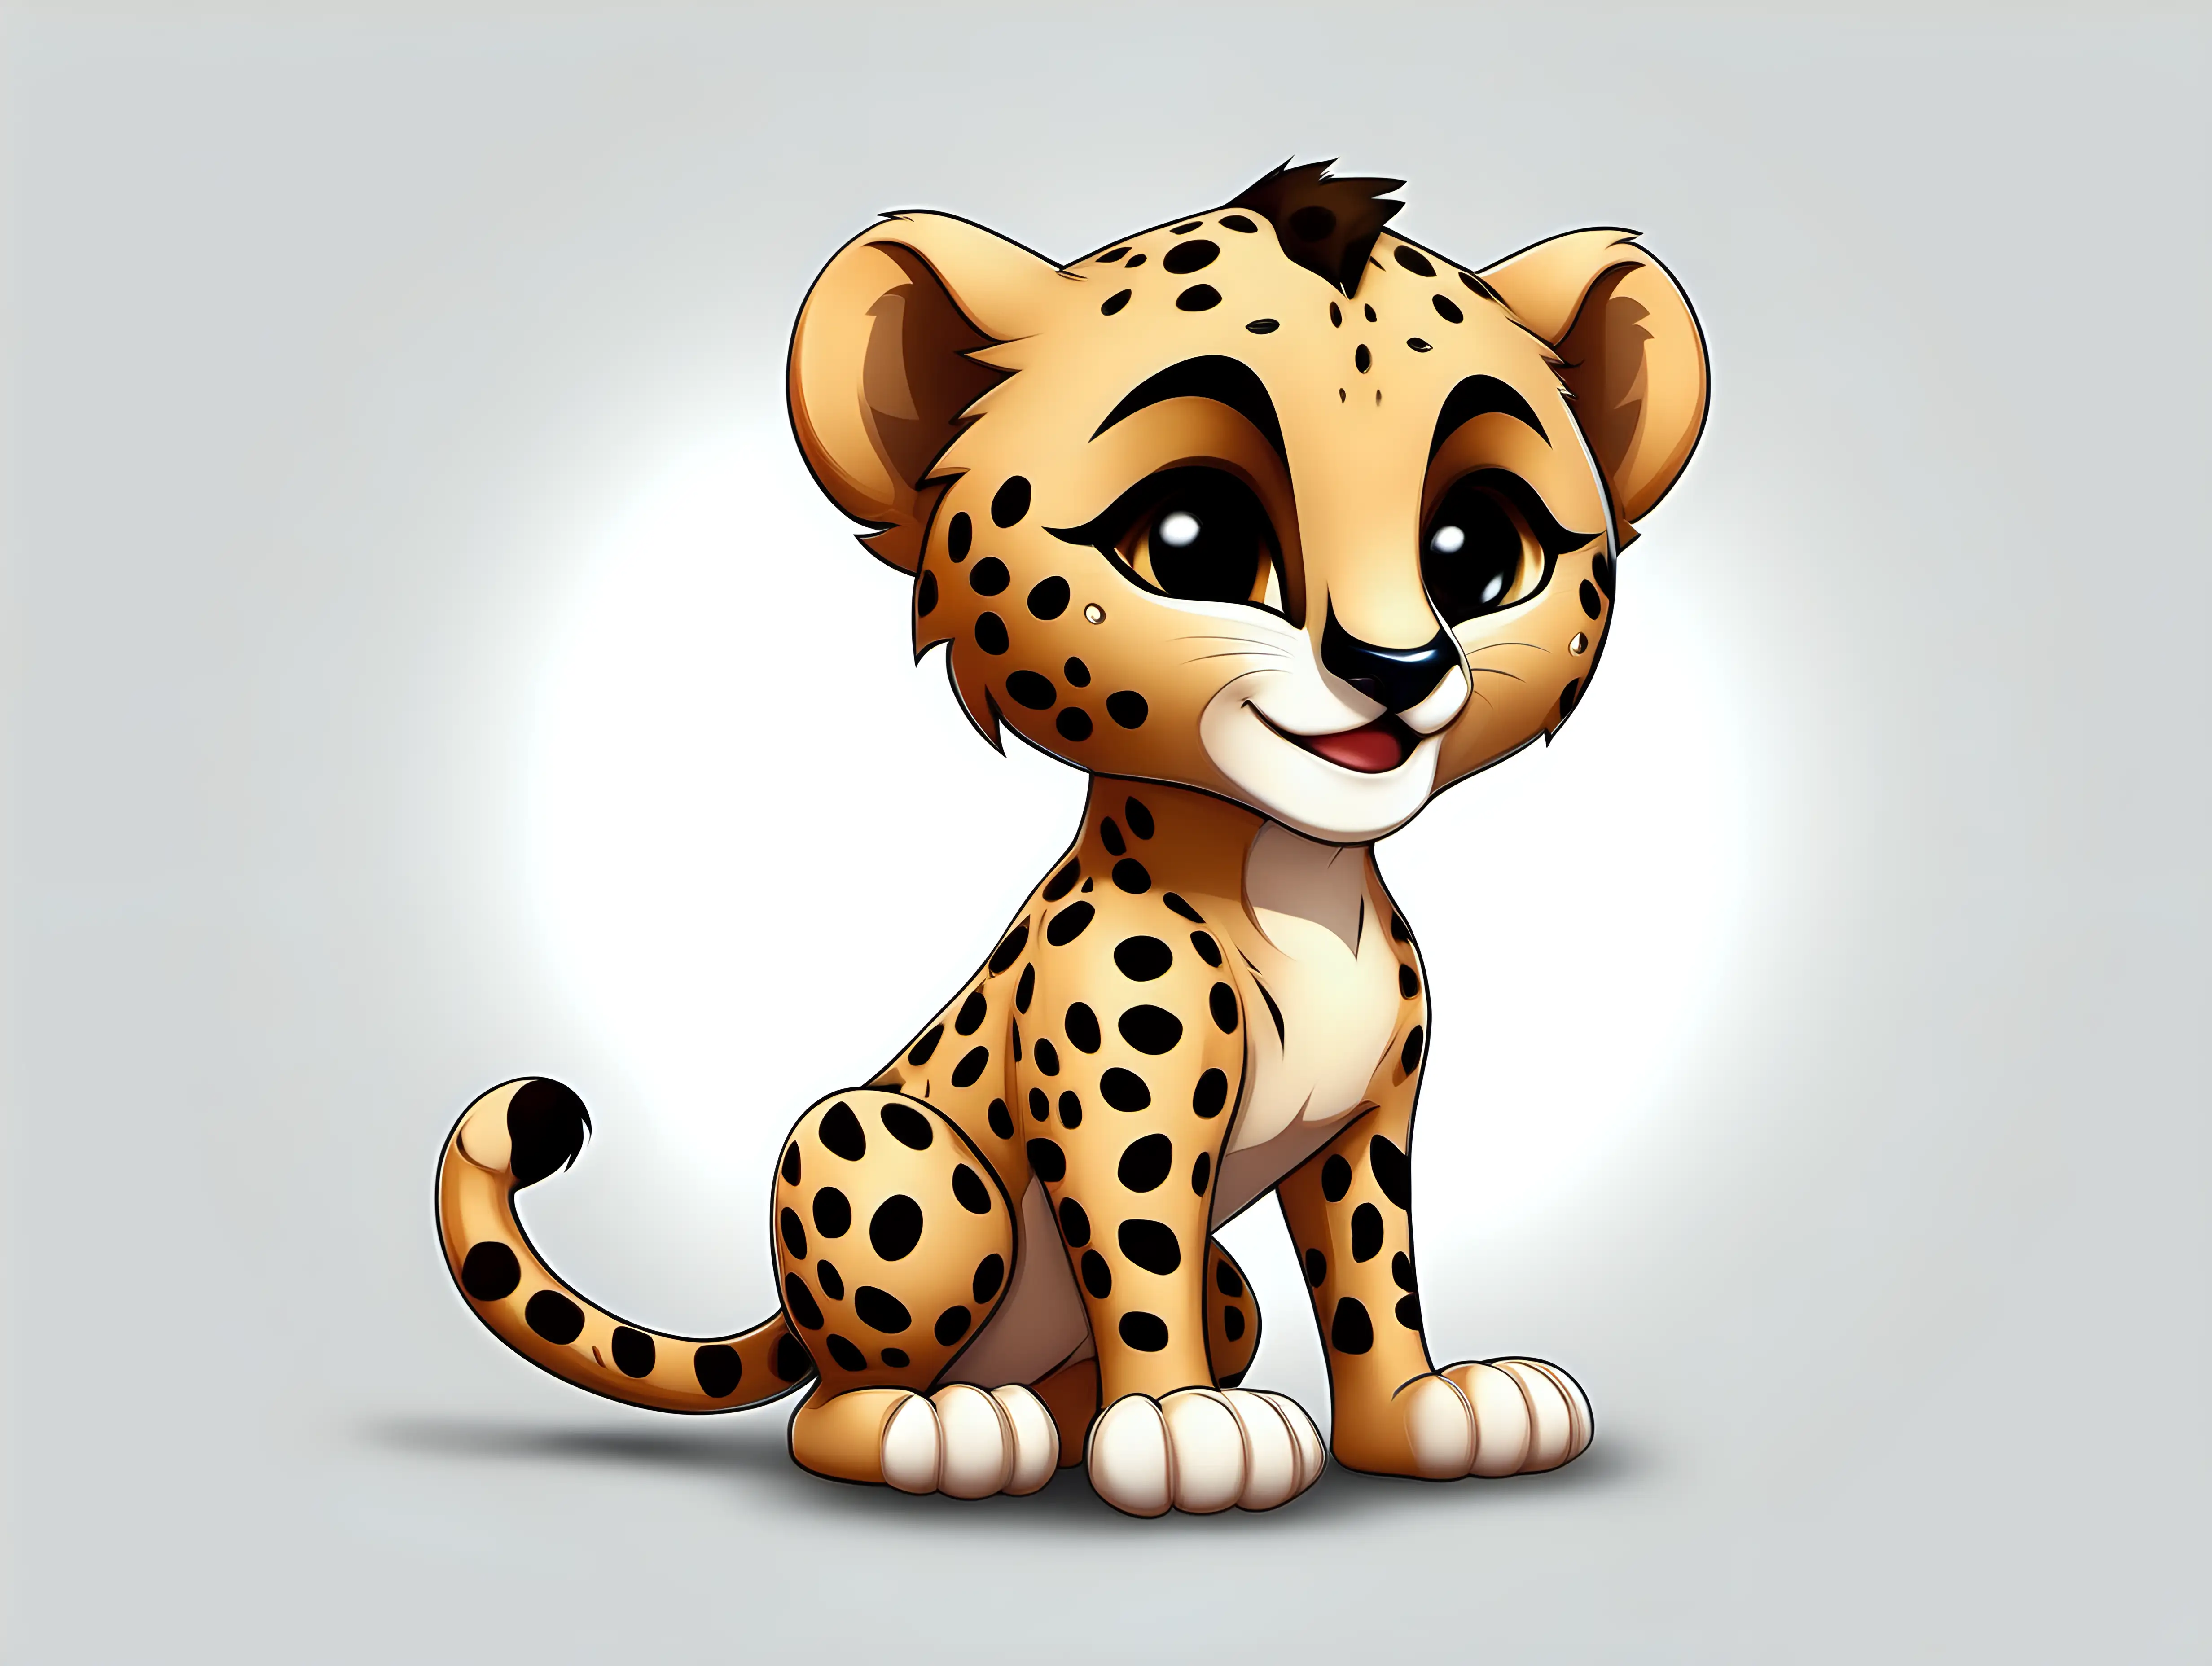 Animated cartoon baby cheetah friendly full body on white background